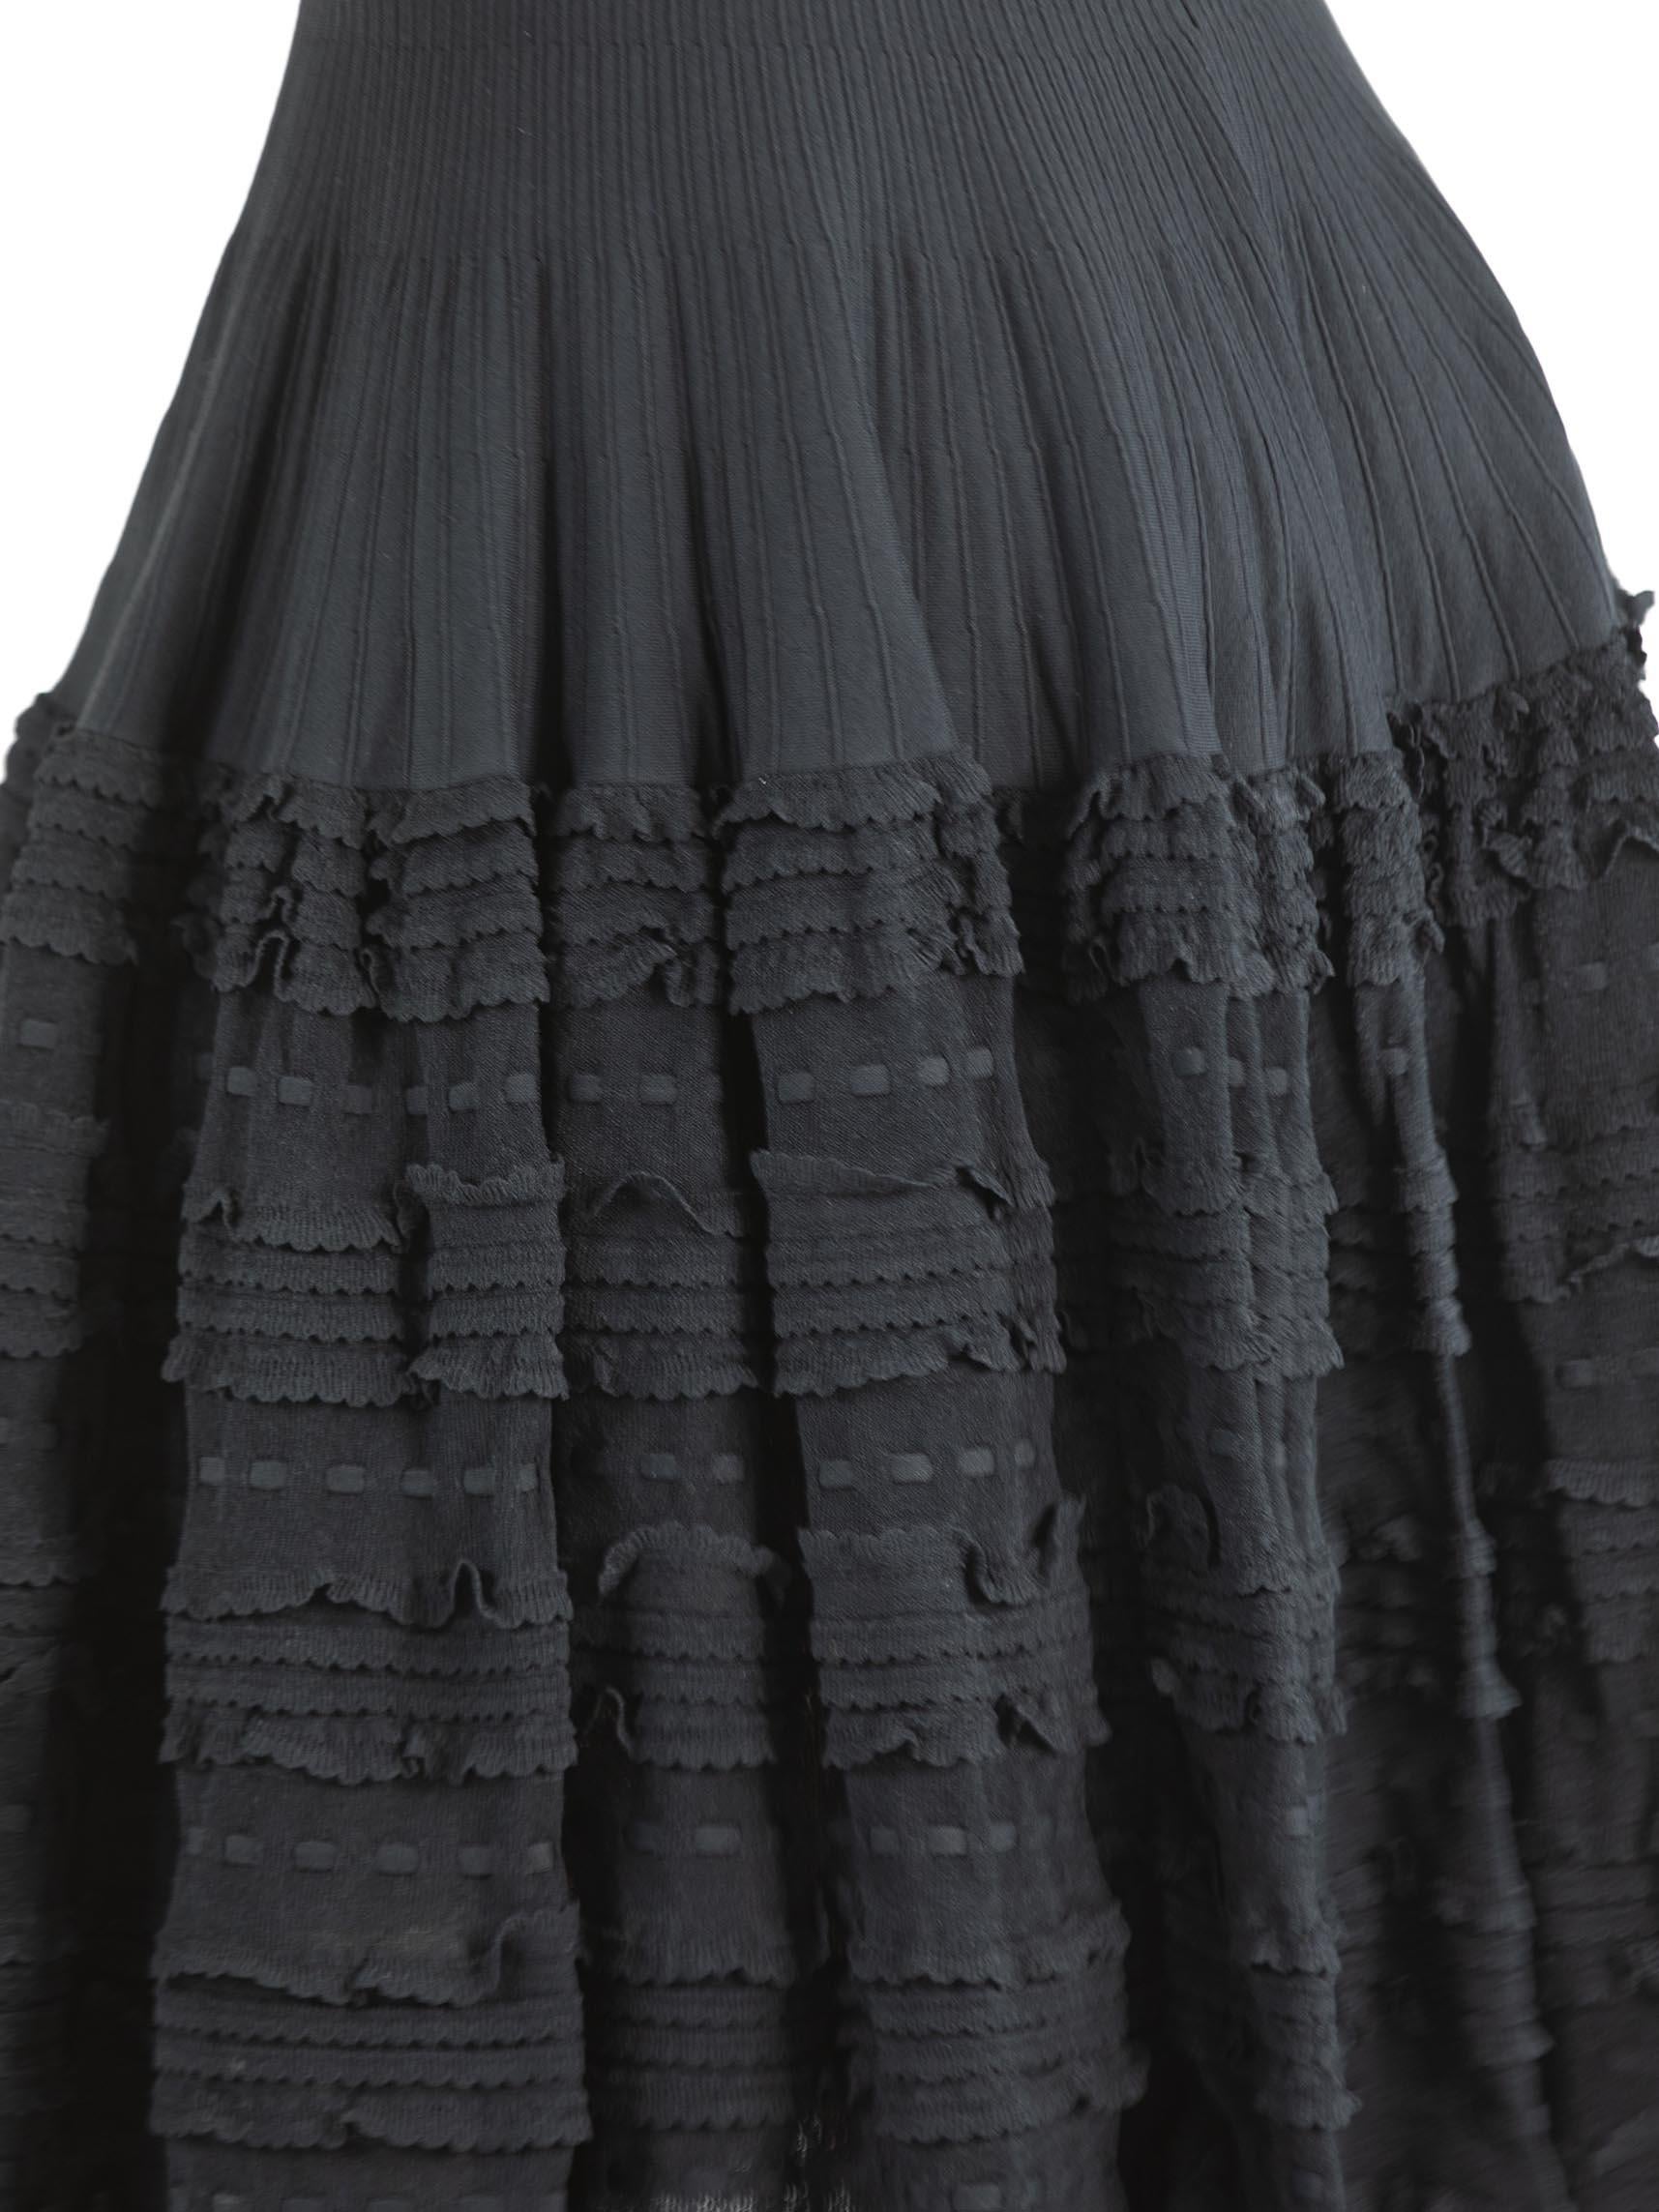 2000S AZZEDINE ALAIA Black White Rayon Blend Crotchet Knit A Line Skirt And Tan For Sale 4